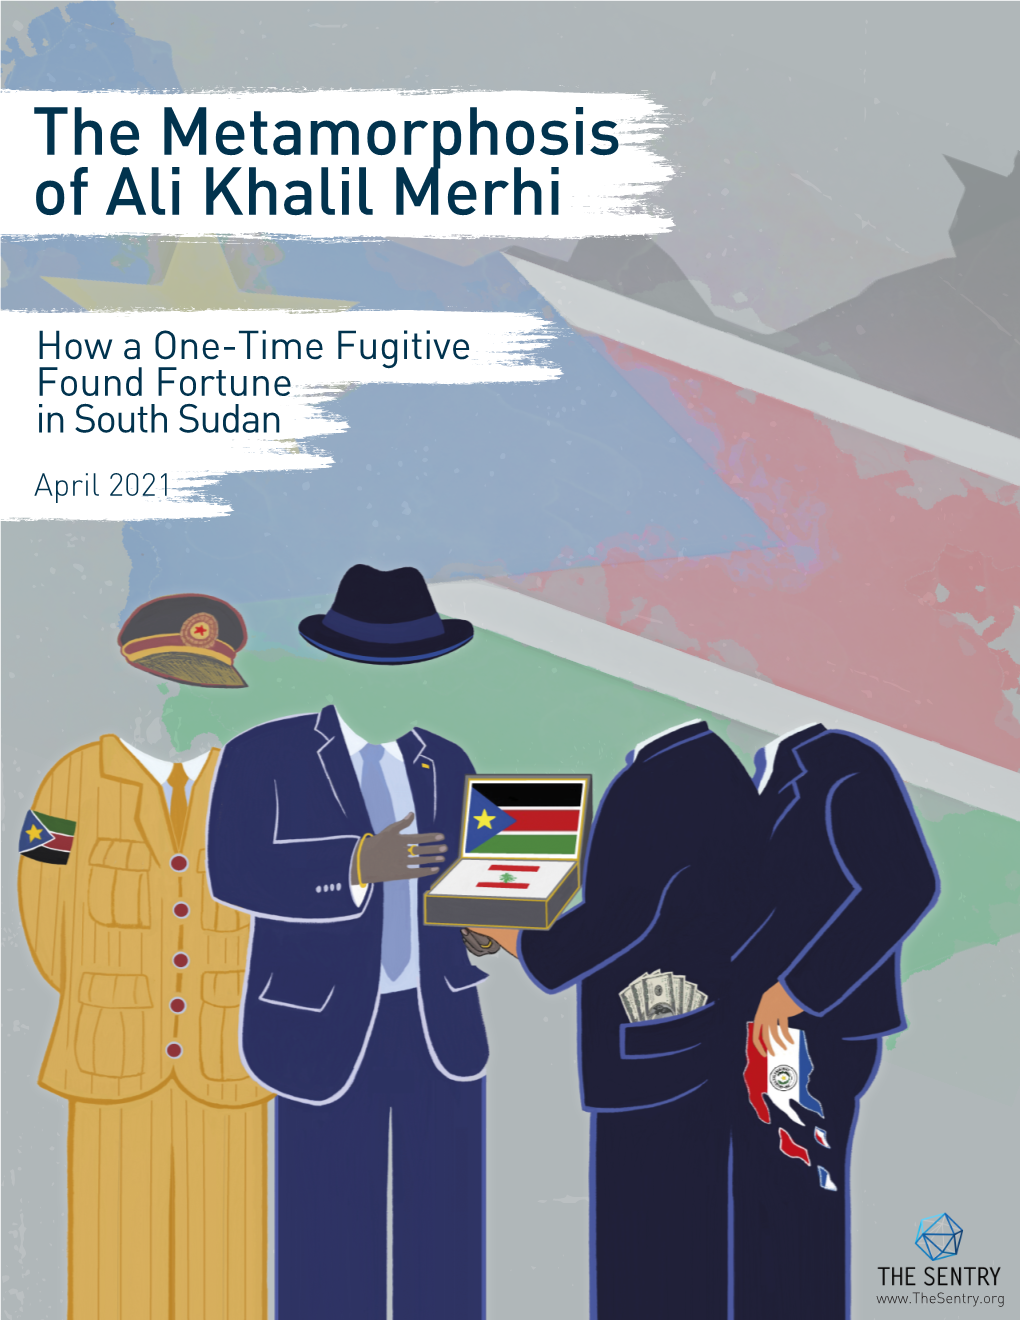 The Metamorphosis of Ali Khalil Merhi